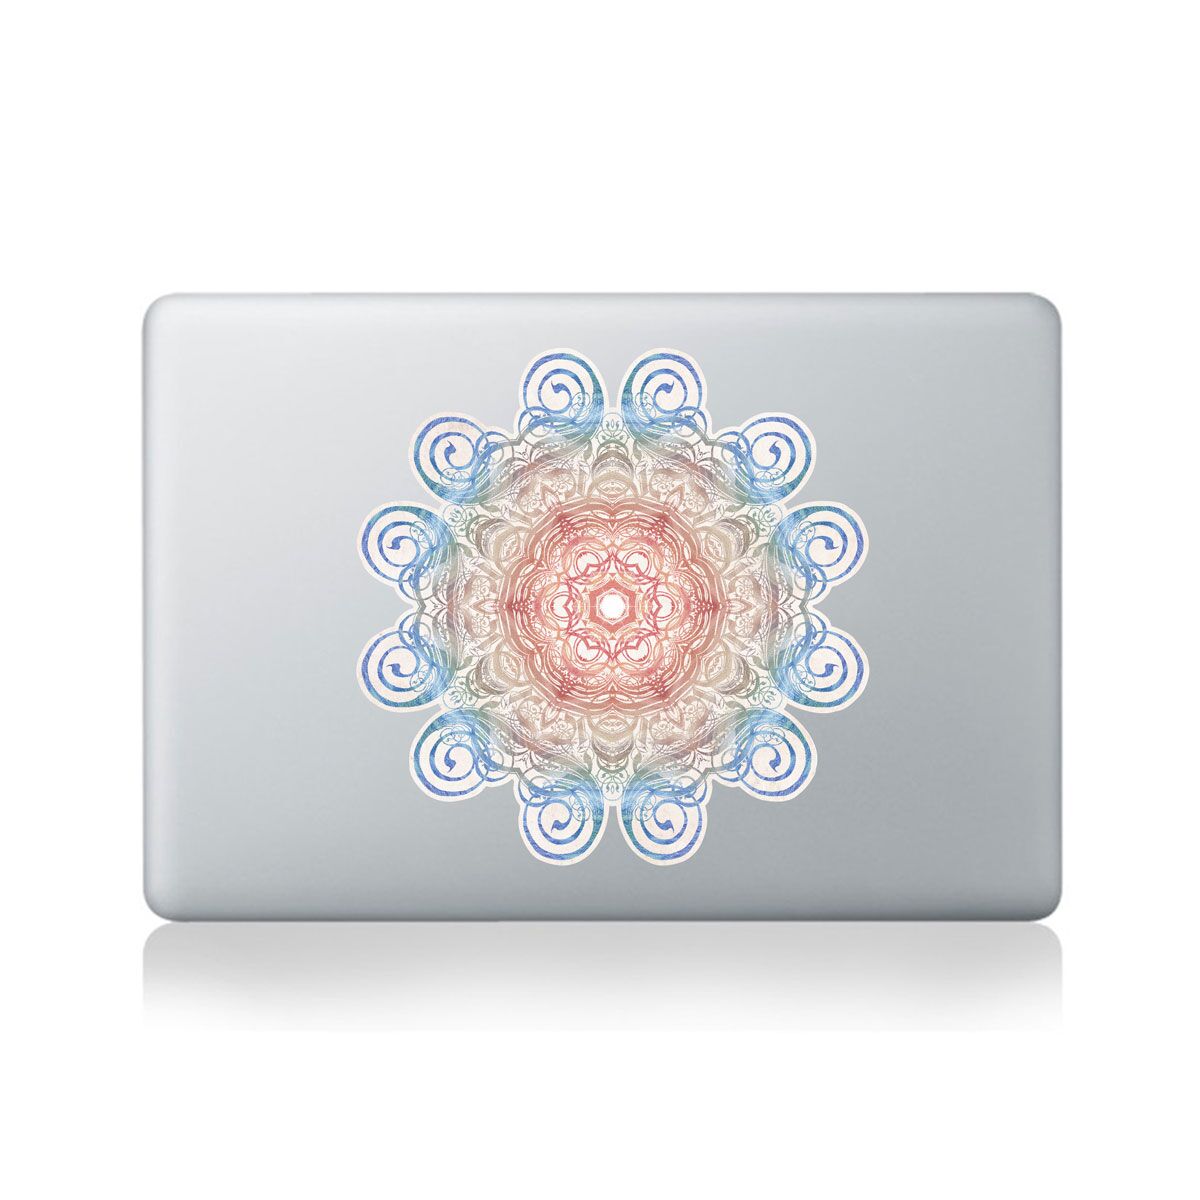 Calligraphy Geometric Swirls Mandala Macbook Sticker